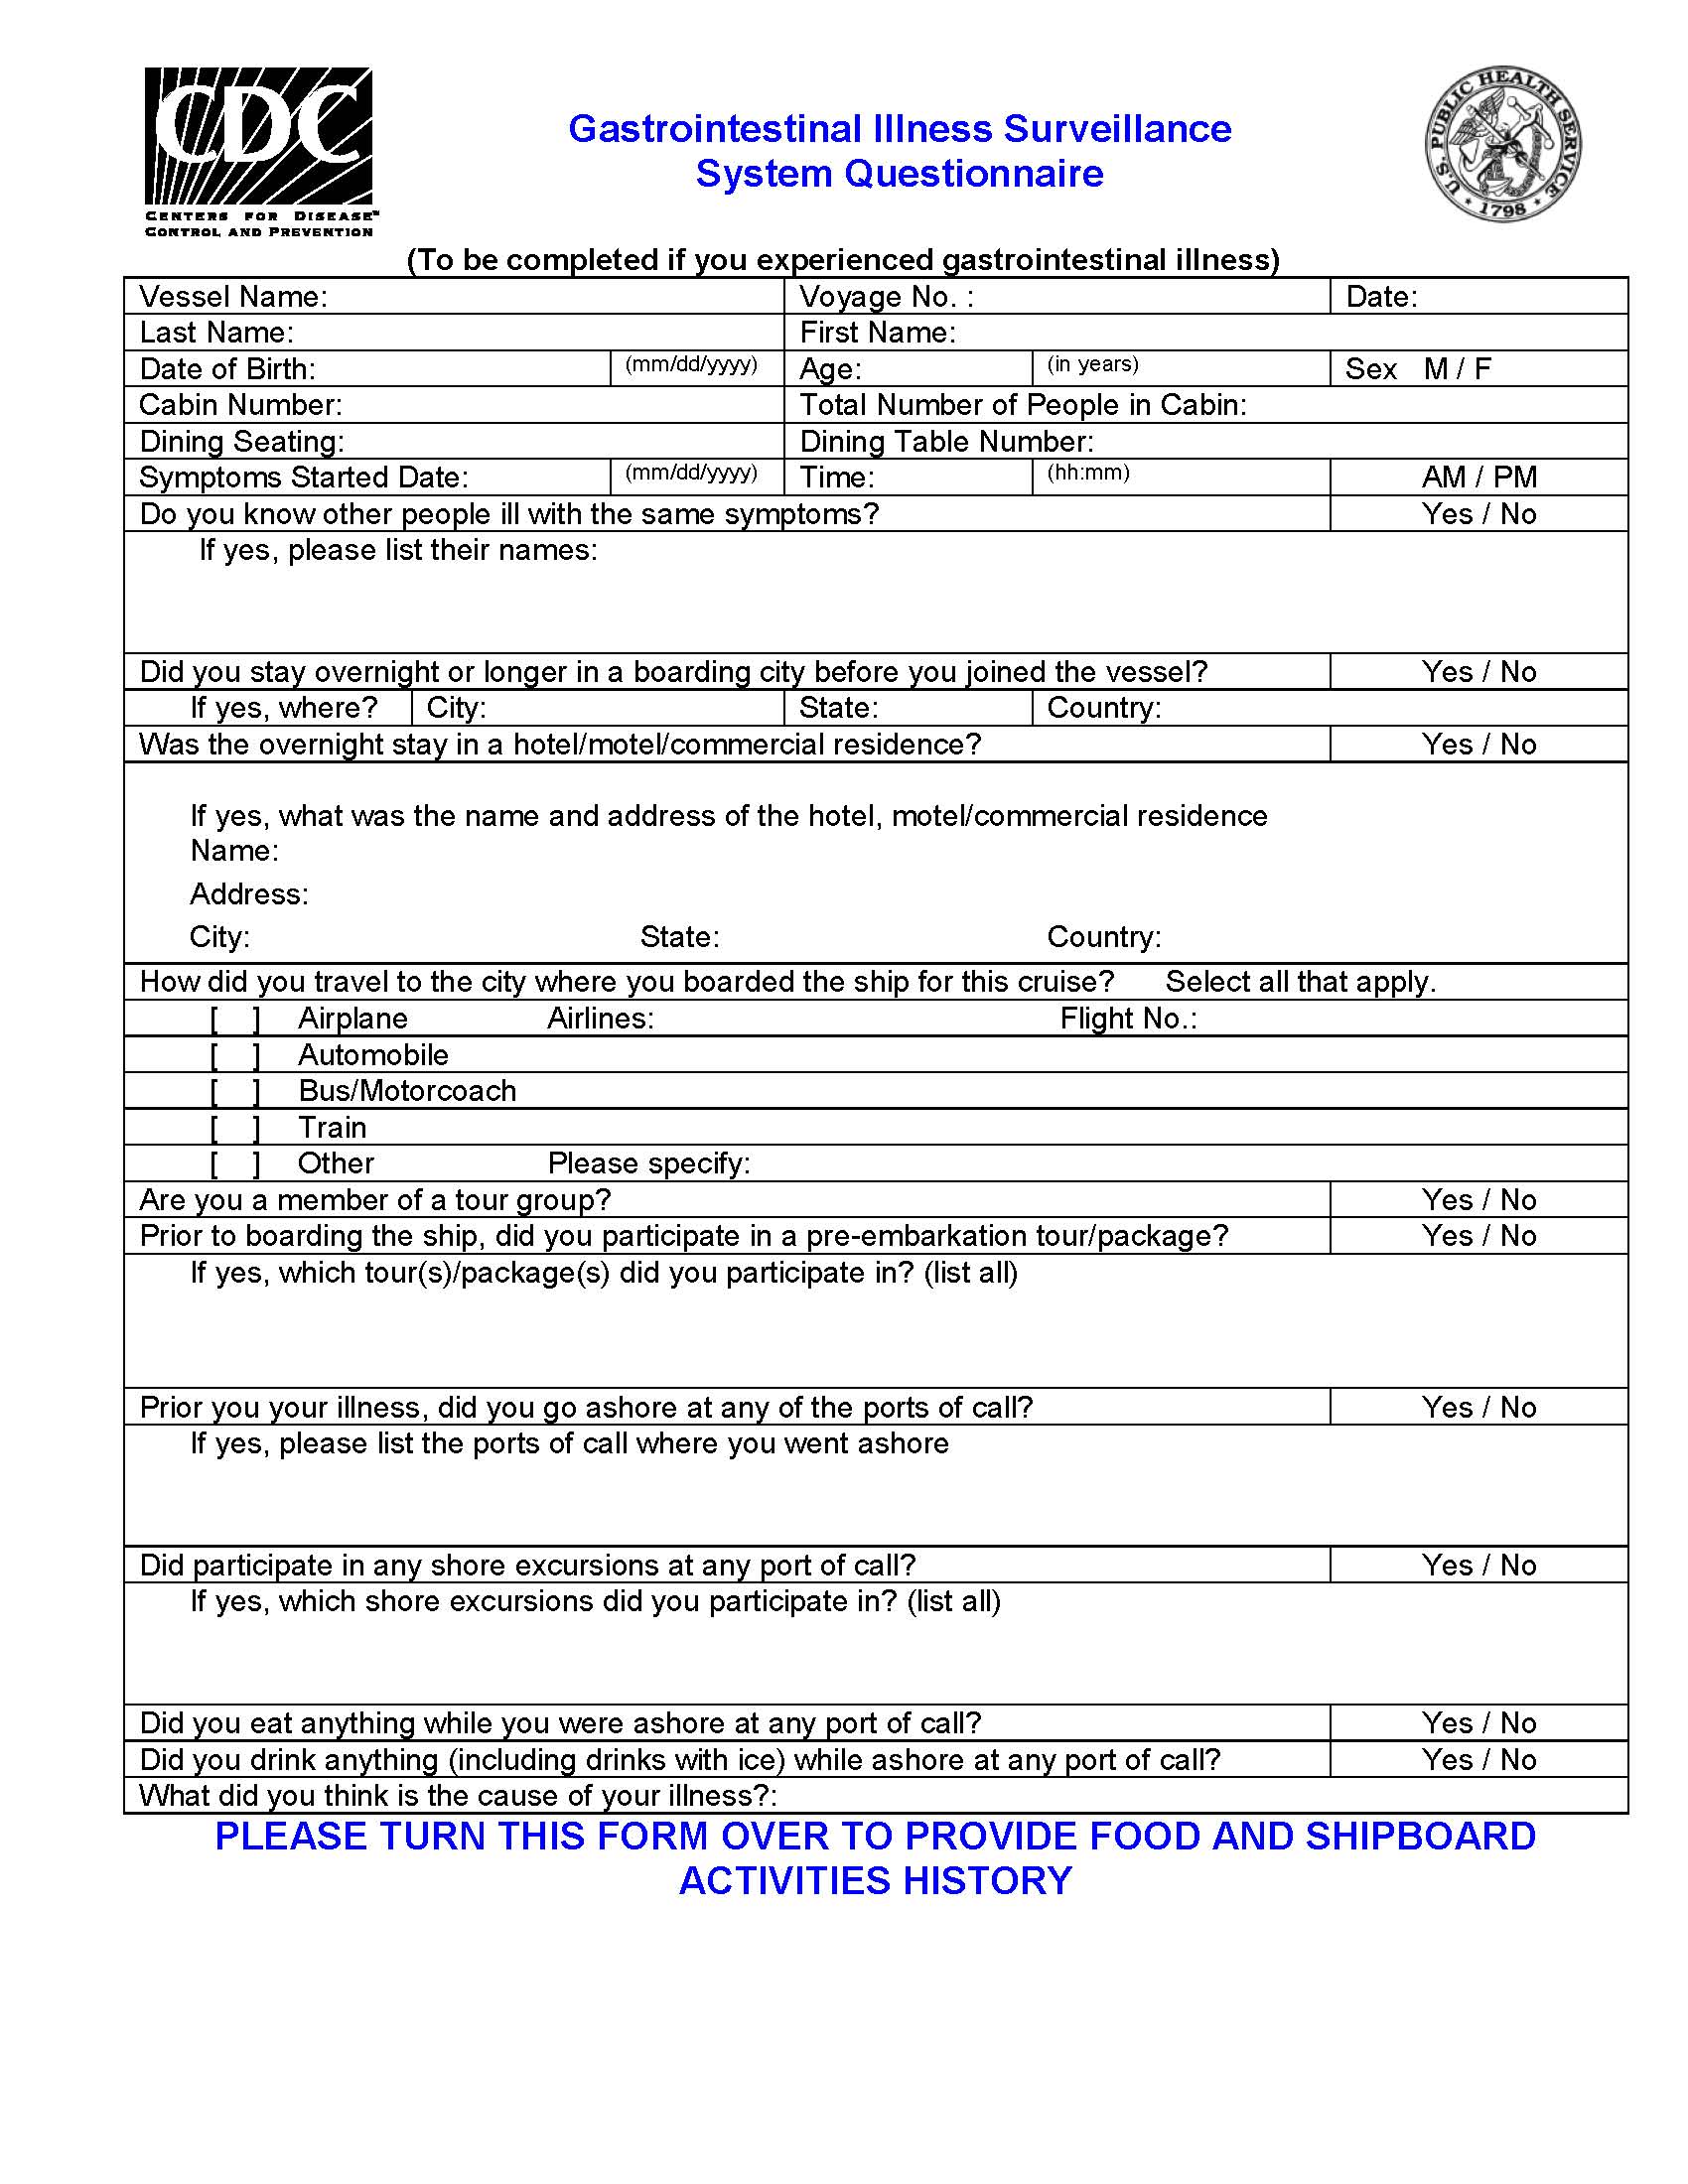 gastrointestinal illness surveillance system questionnaire_page_1.jpg